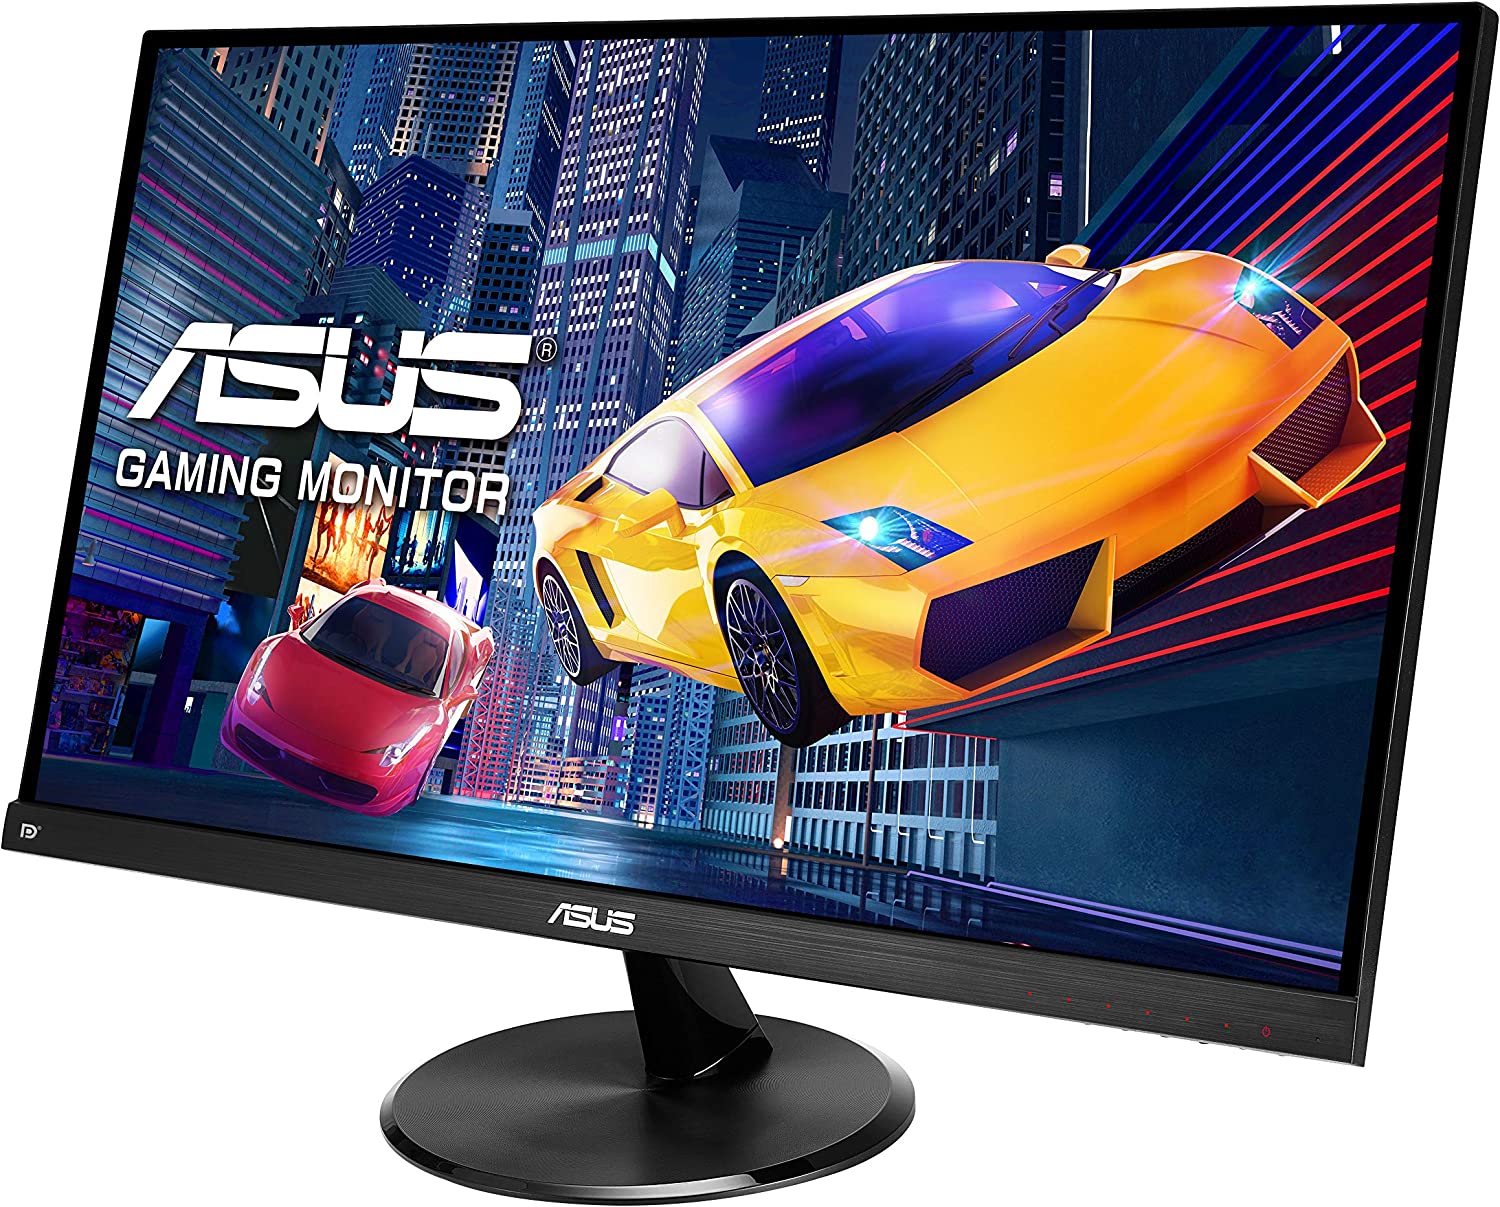 Asus Gaming Monitor 23.8" LED IPS FullHD 144Hz FreeSync - Réponse 4ms - Haut-parleurs intégrés - Angle de vision 178º -16:9 - VGA, HDMI, DisplayPort - VESA 100x100mm